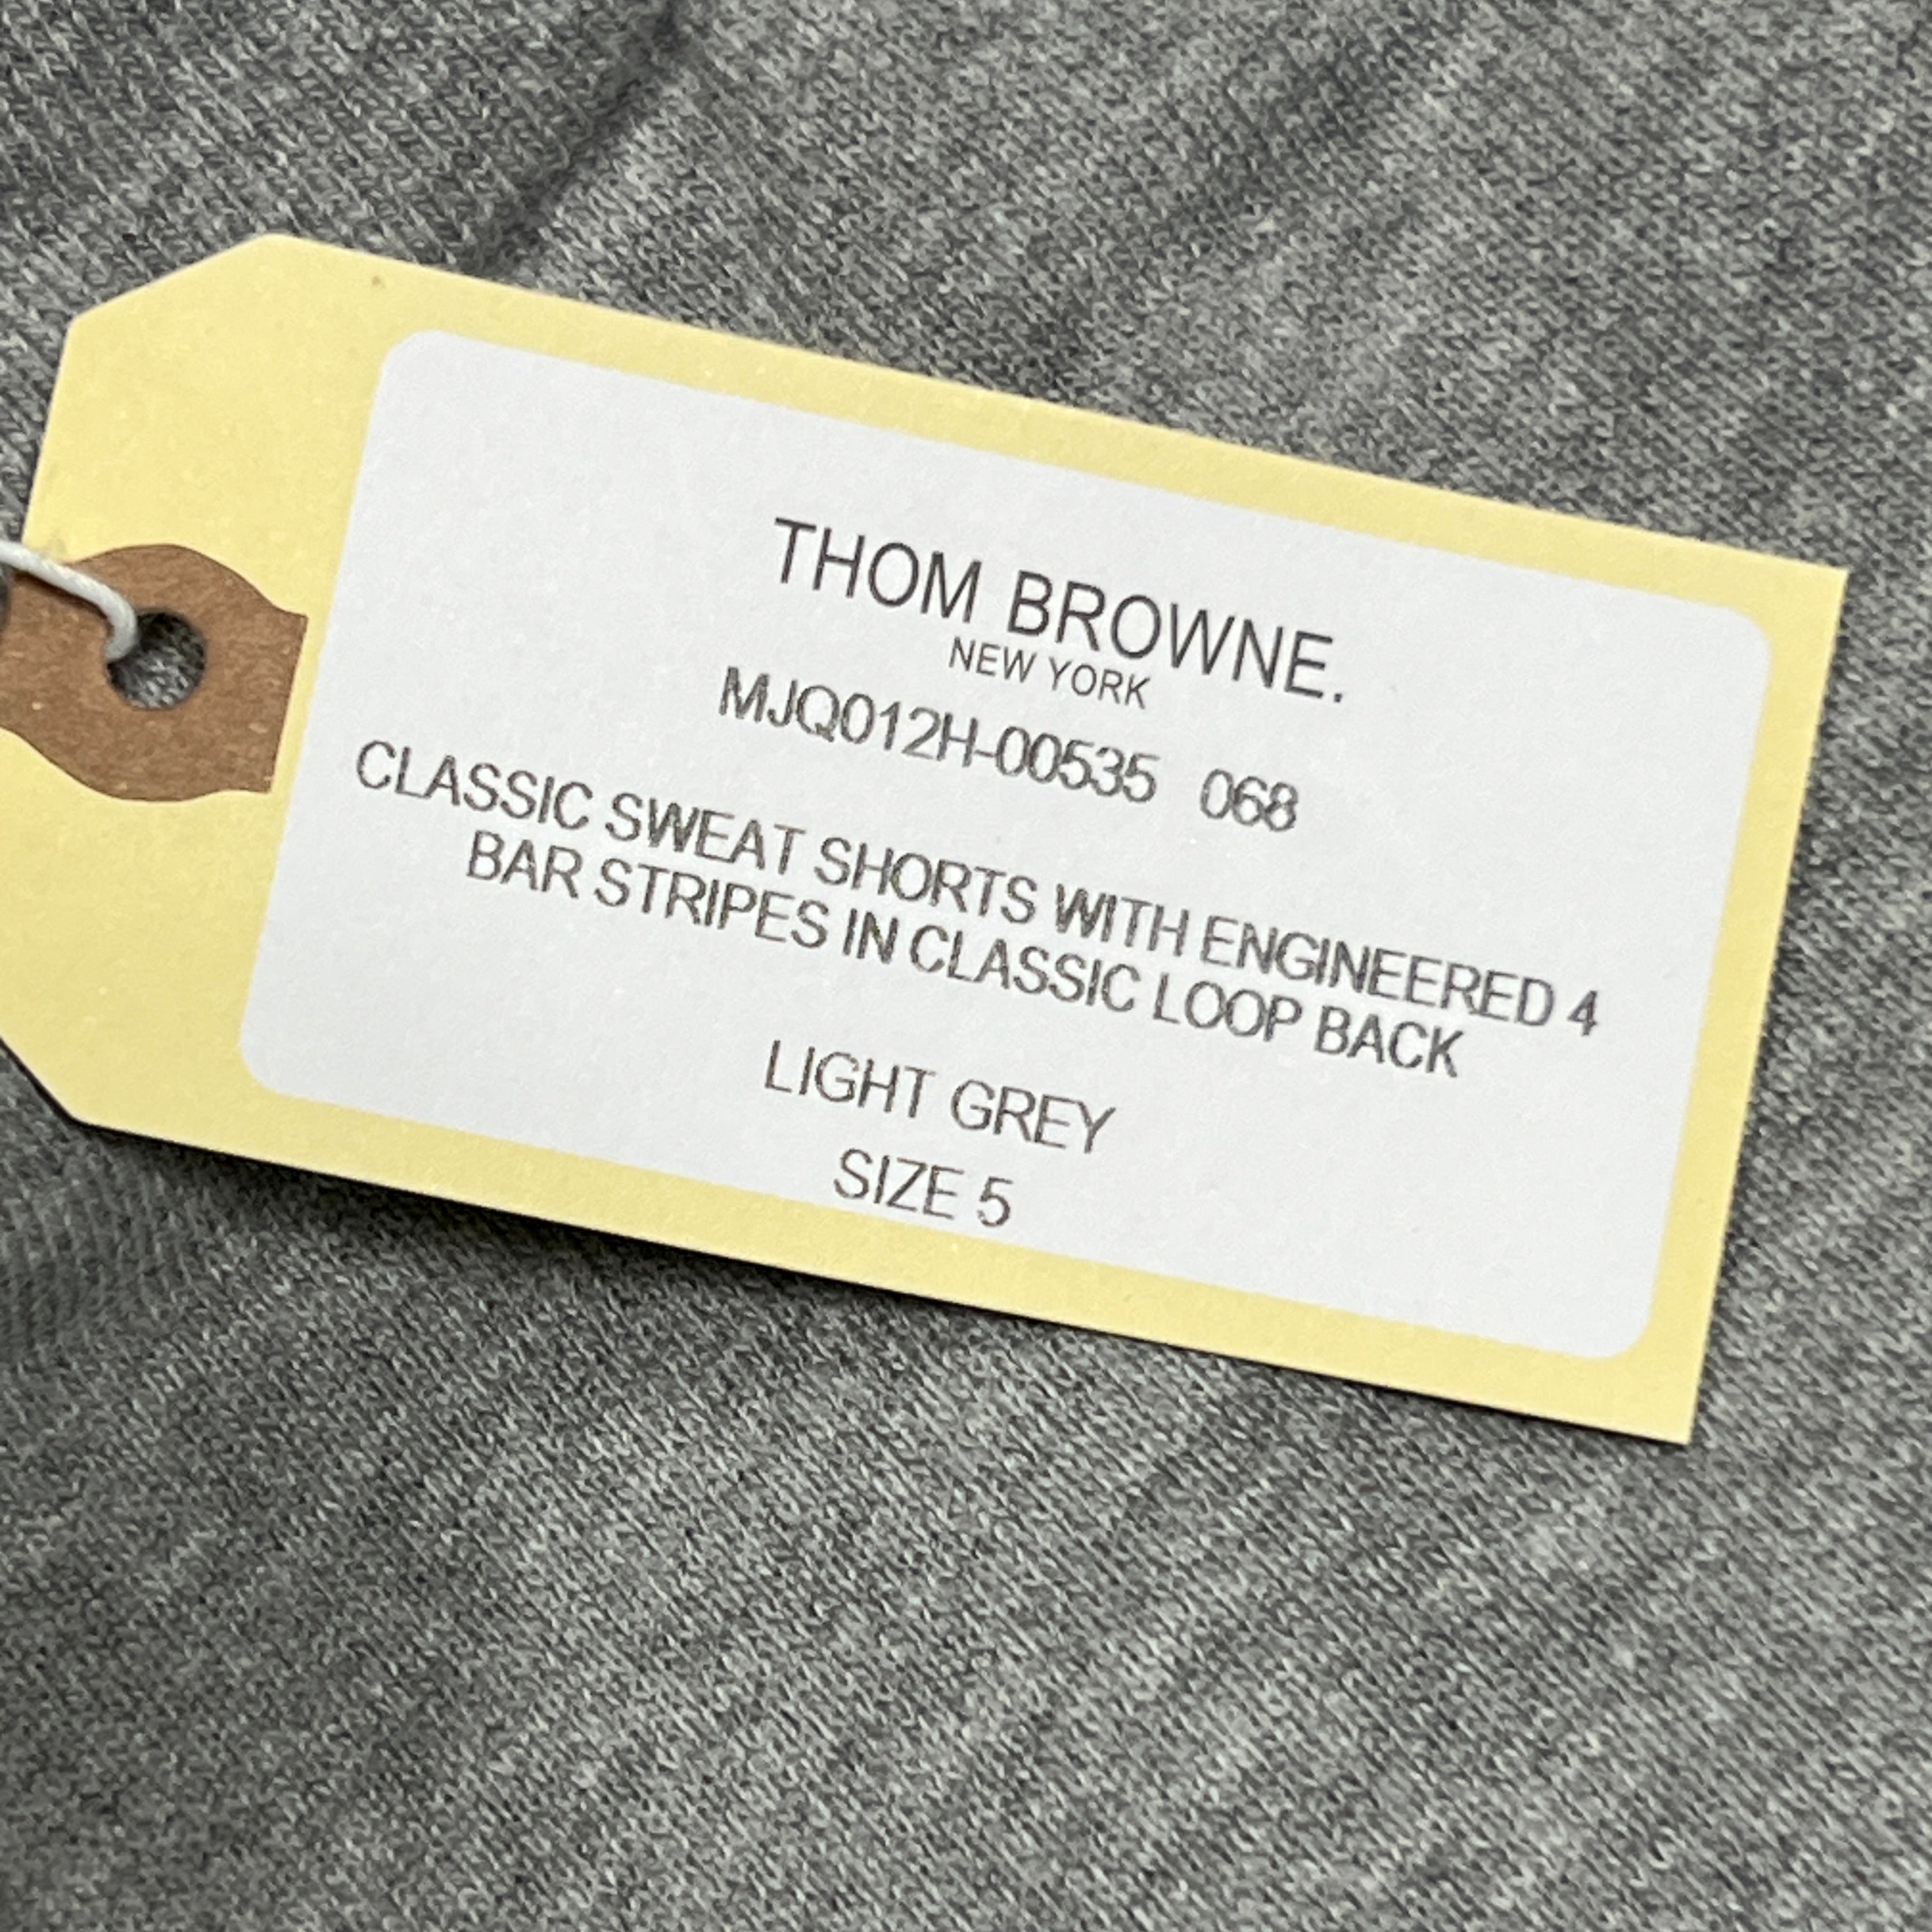 THOM BROWNE Classic Sweat Shorts w/4 Bar Loop Back Light Grey Size